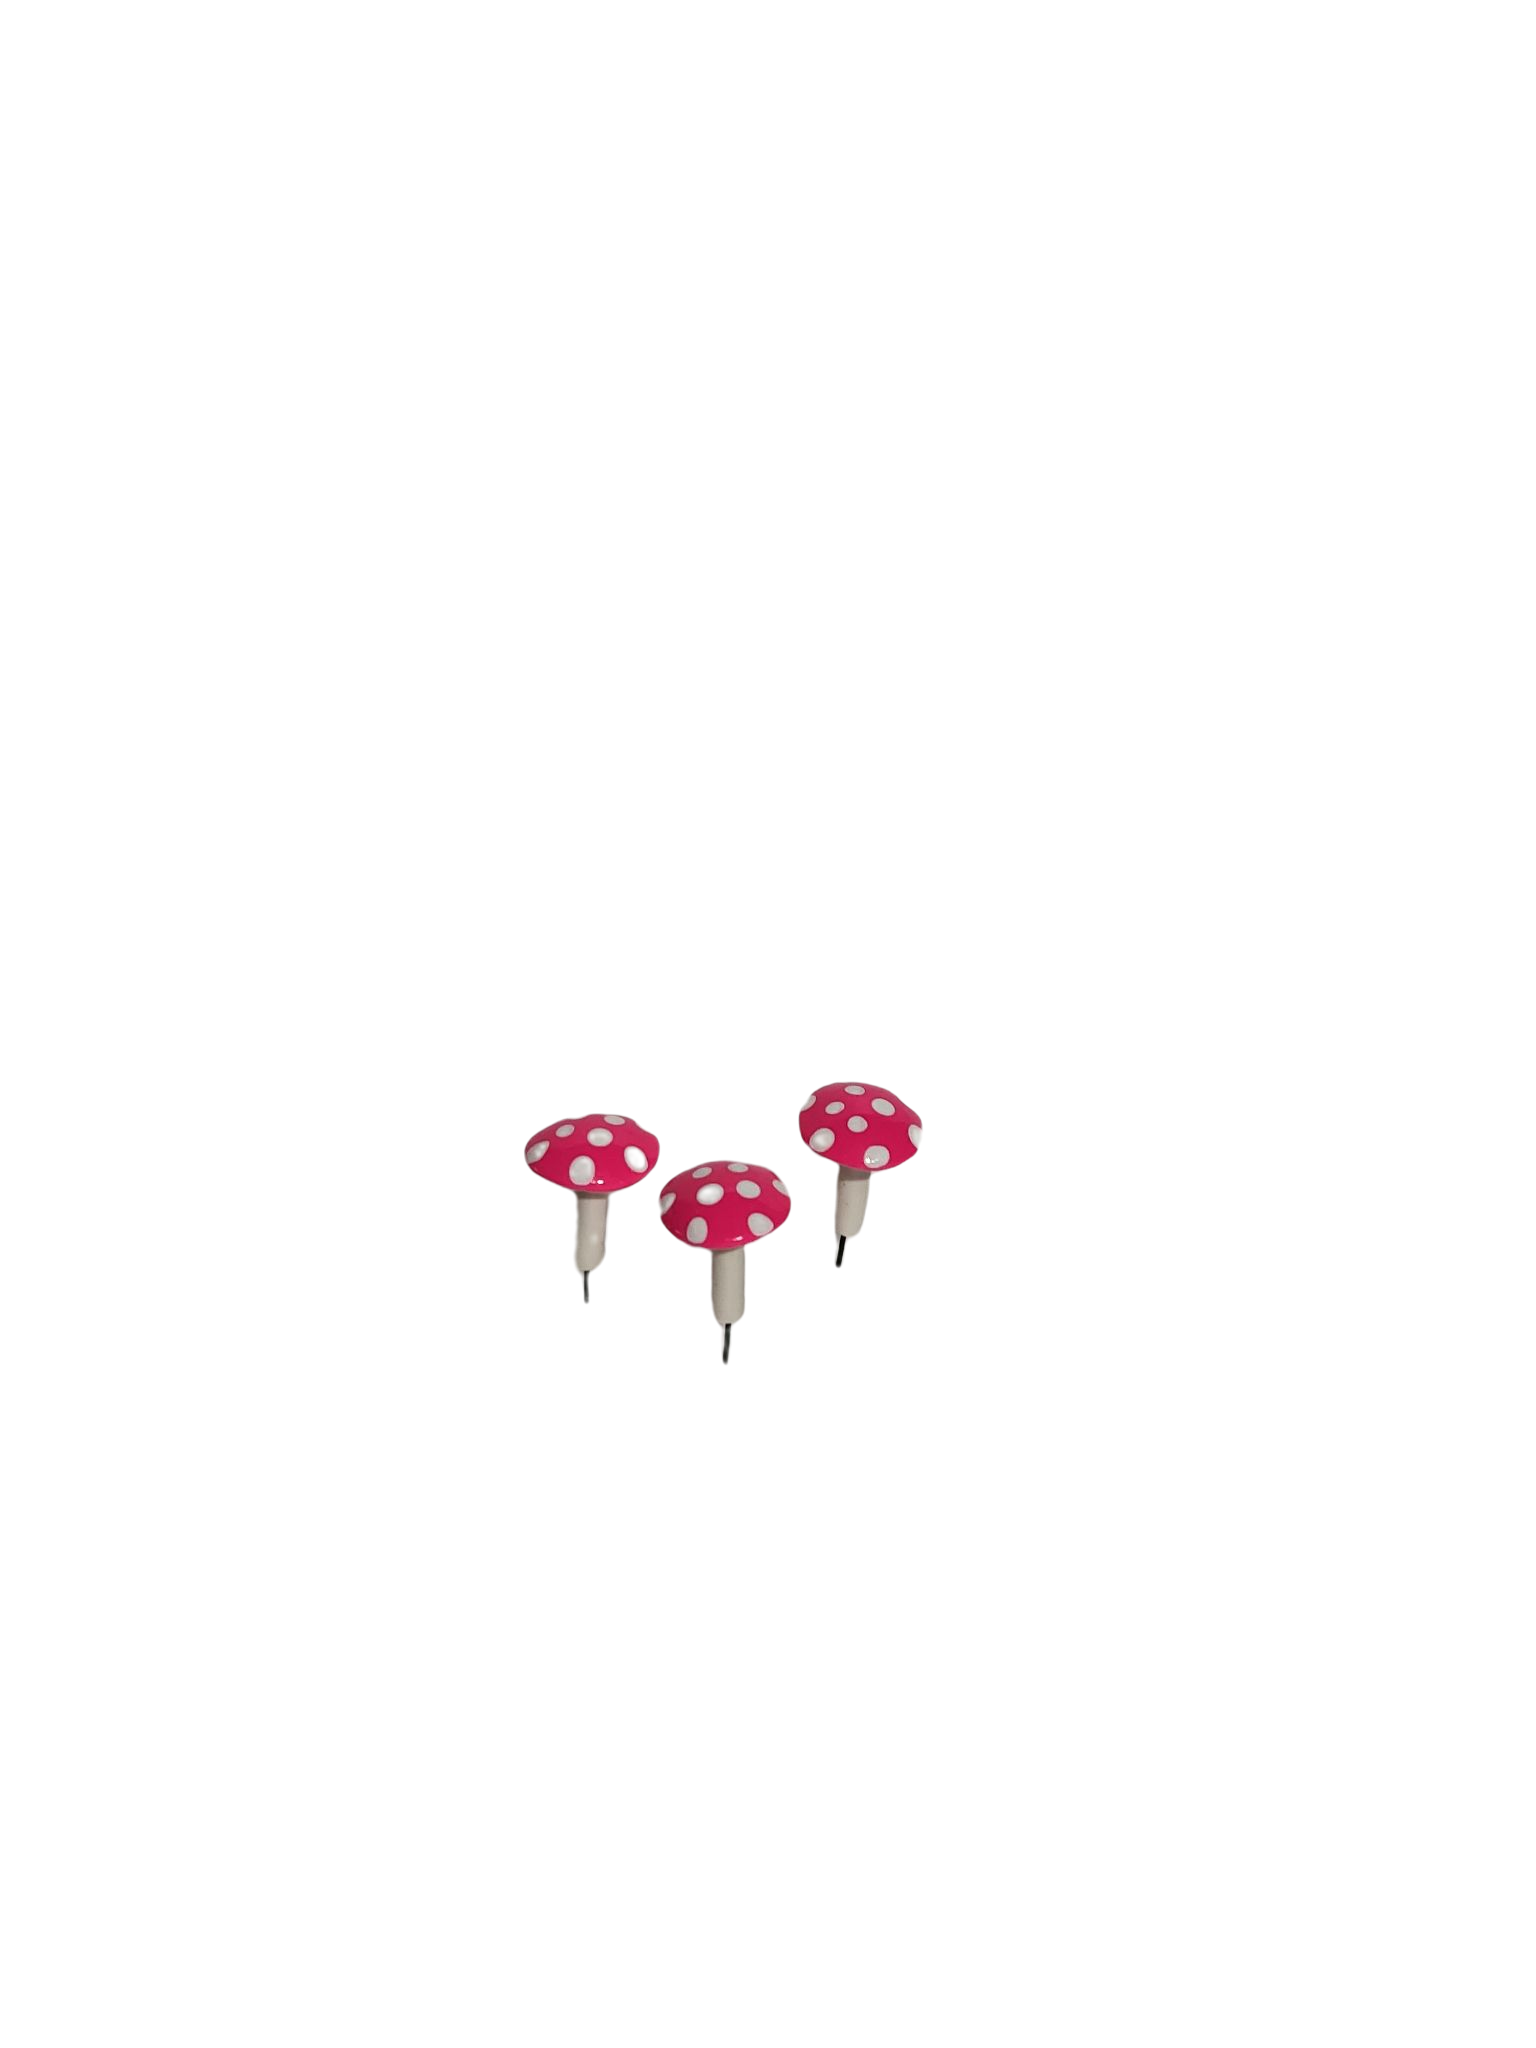 Mini Glossy Mushrooms - Set of 3 - Pink